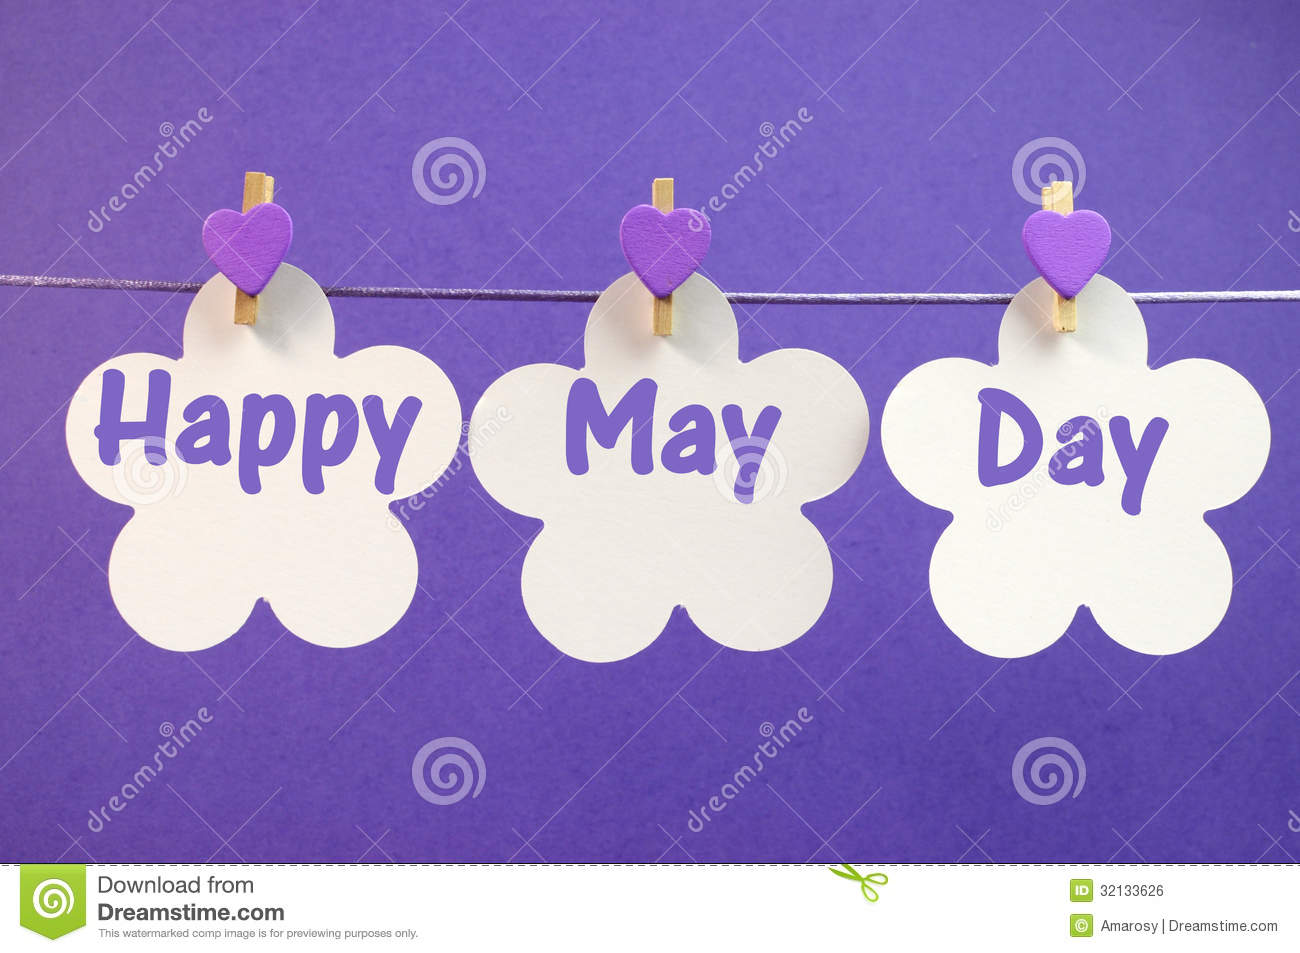 Happy May Day Greeting Card